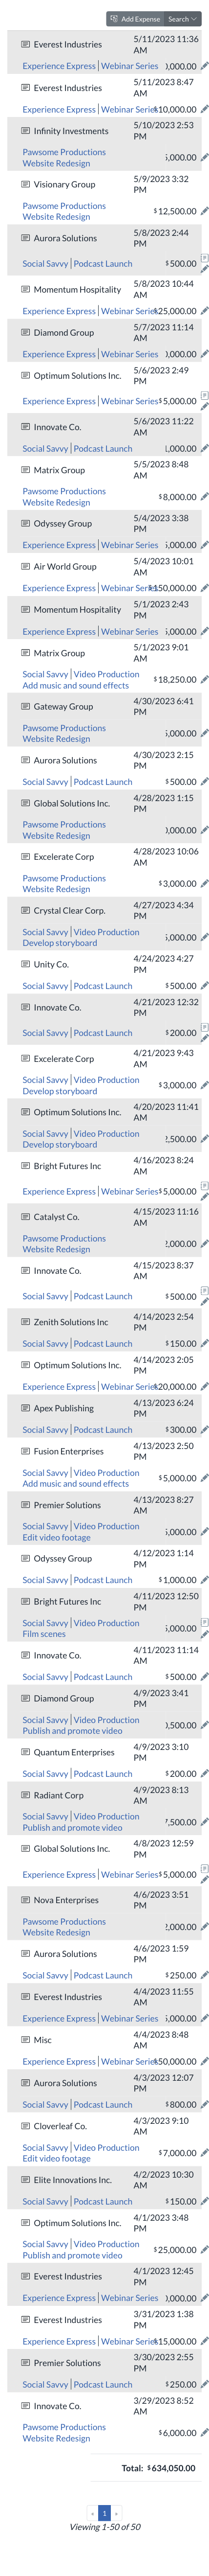 mobile expenses-listing screenshot